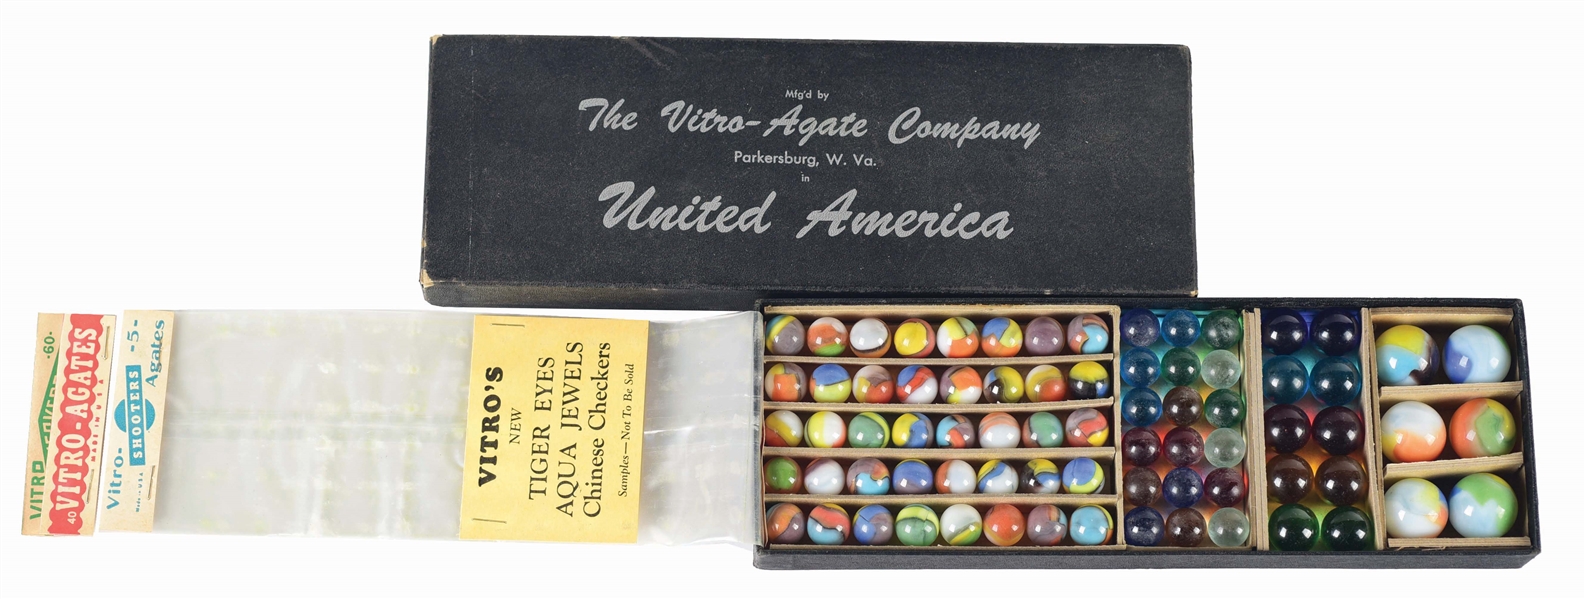 RARE VITRO AGATE BOX SET MADE IN UNITED STATES OF AMERICA.